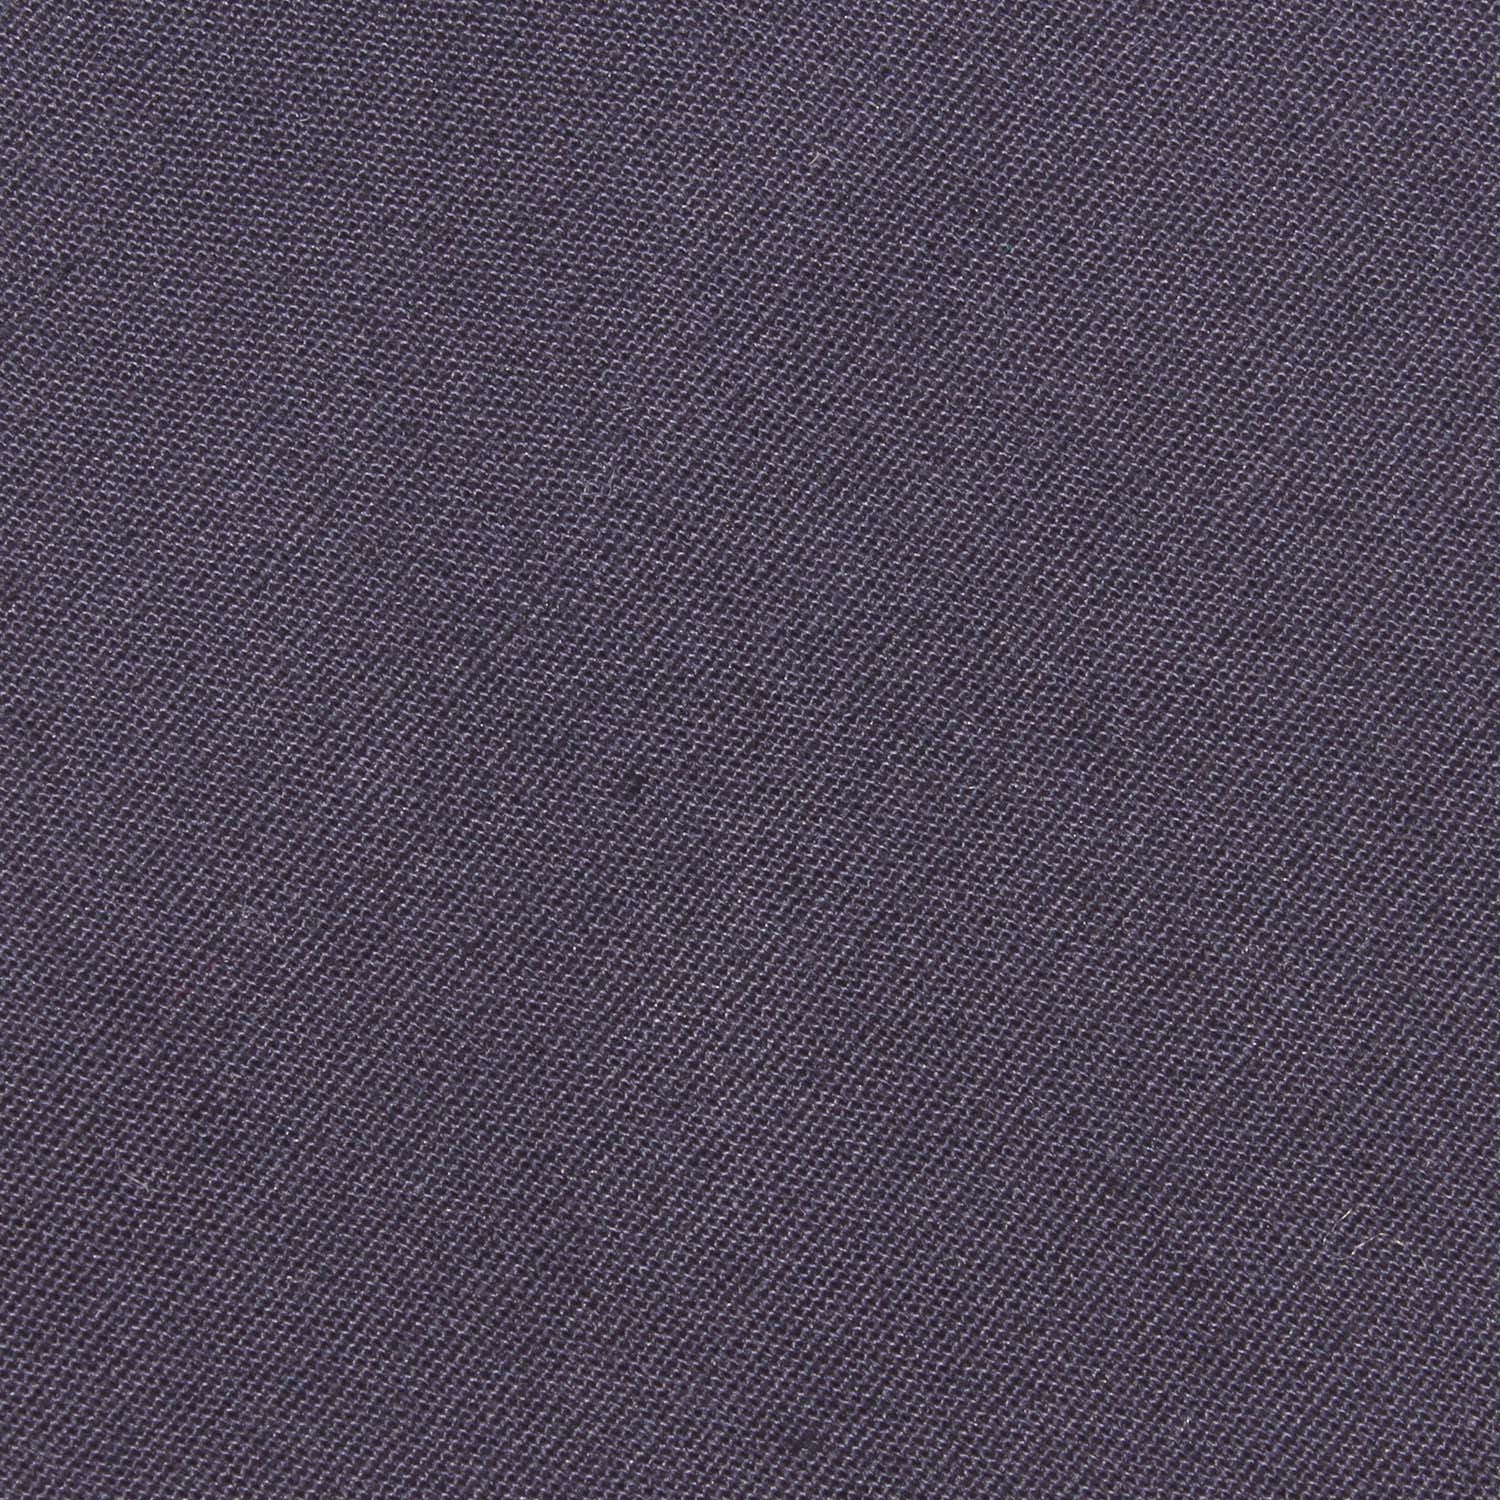 Navy Blue Cotton Fabric Bow Tie C016